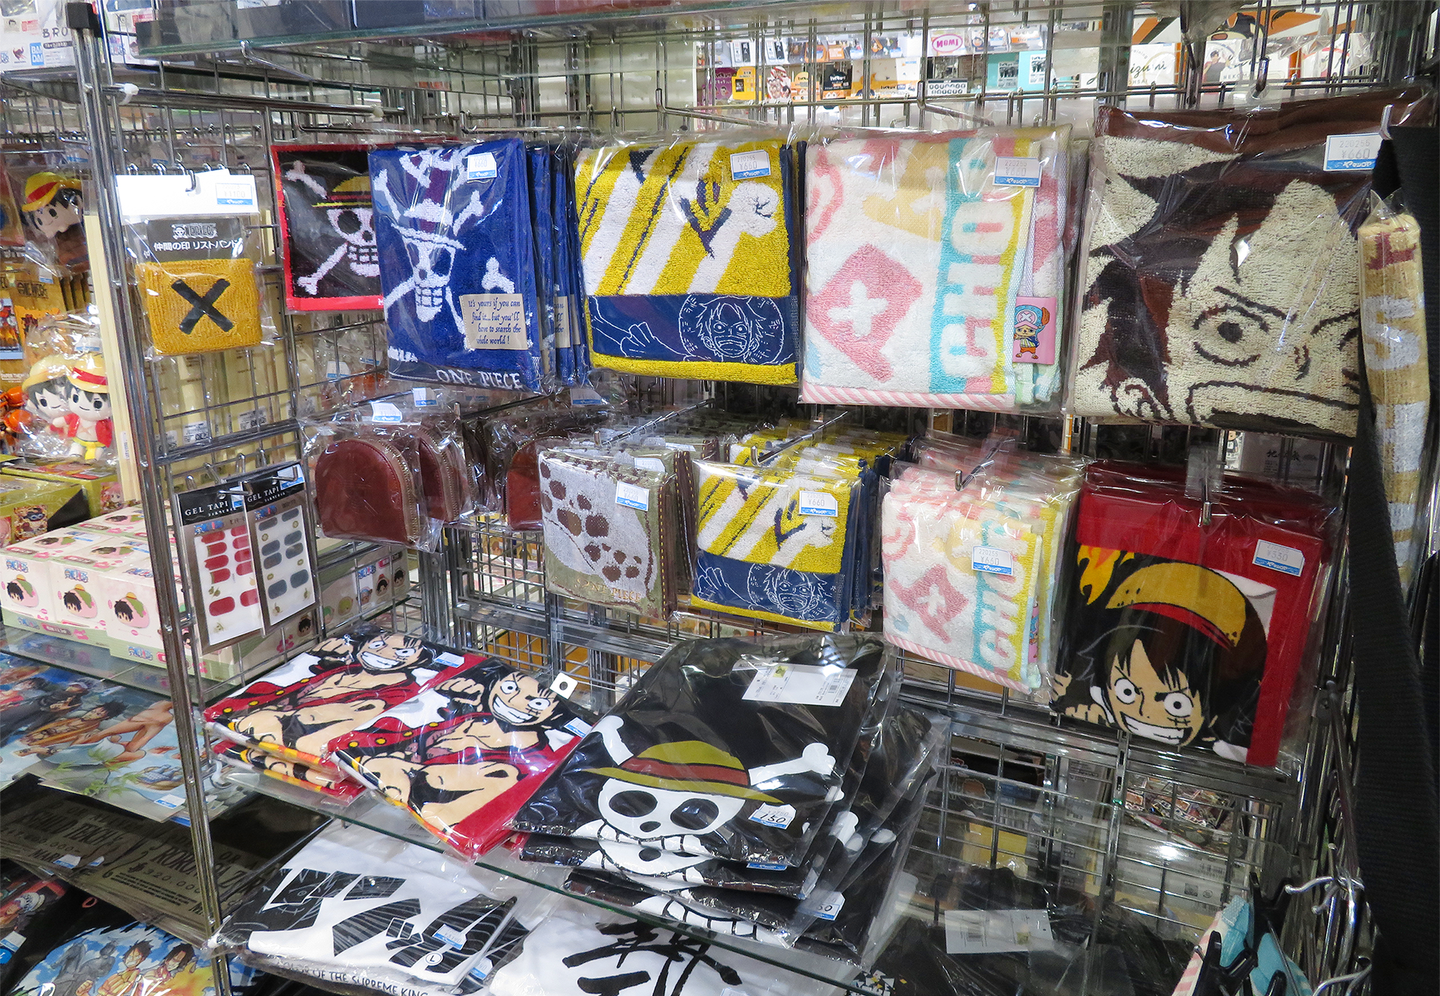 Images of ONE PIECE merchandise sold at YAMASHIROYA3